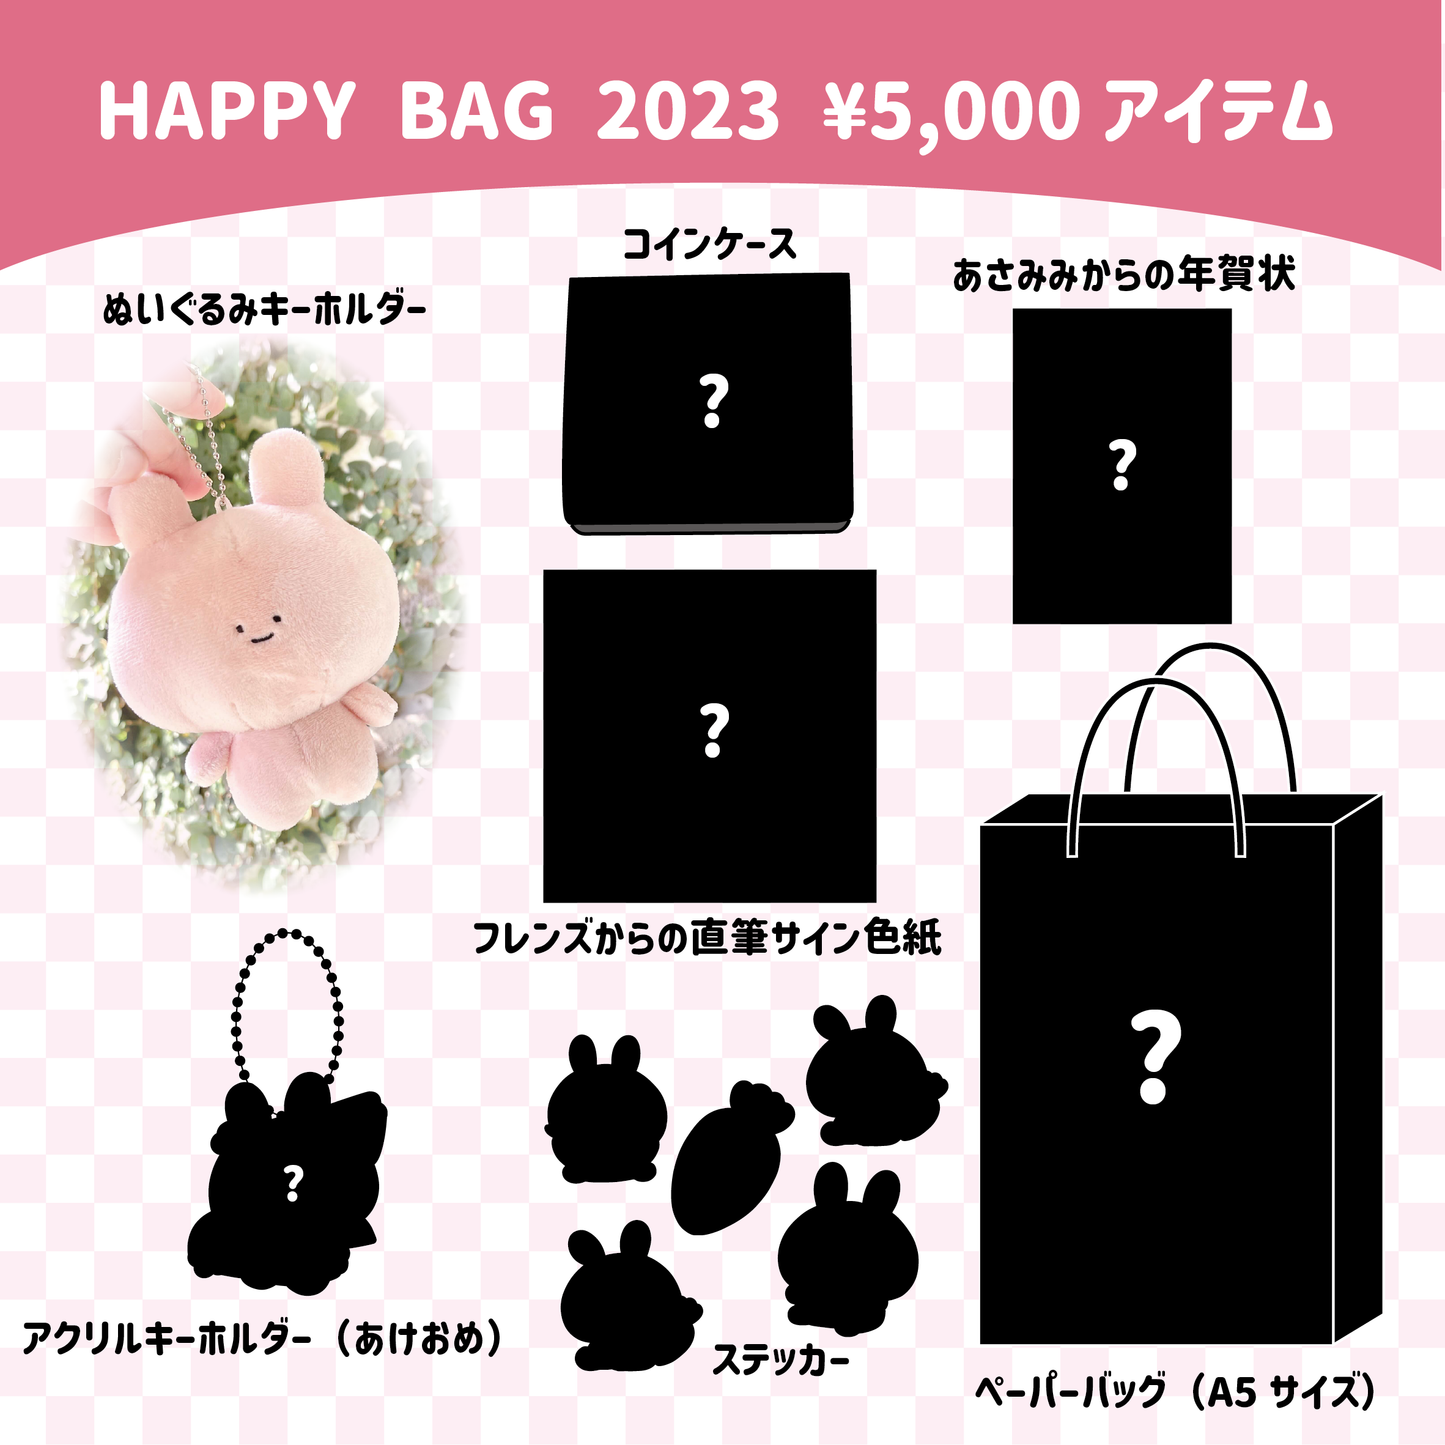 [Asamimi-chan] ASAMIMI HAPPY BAG (¥5,000) [Limited quantity pre-order]